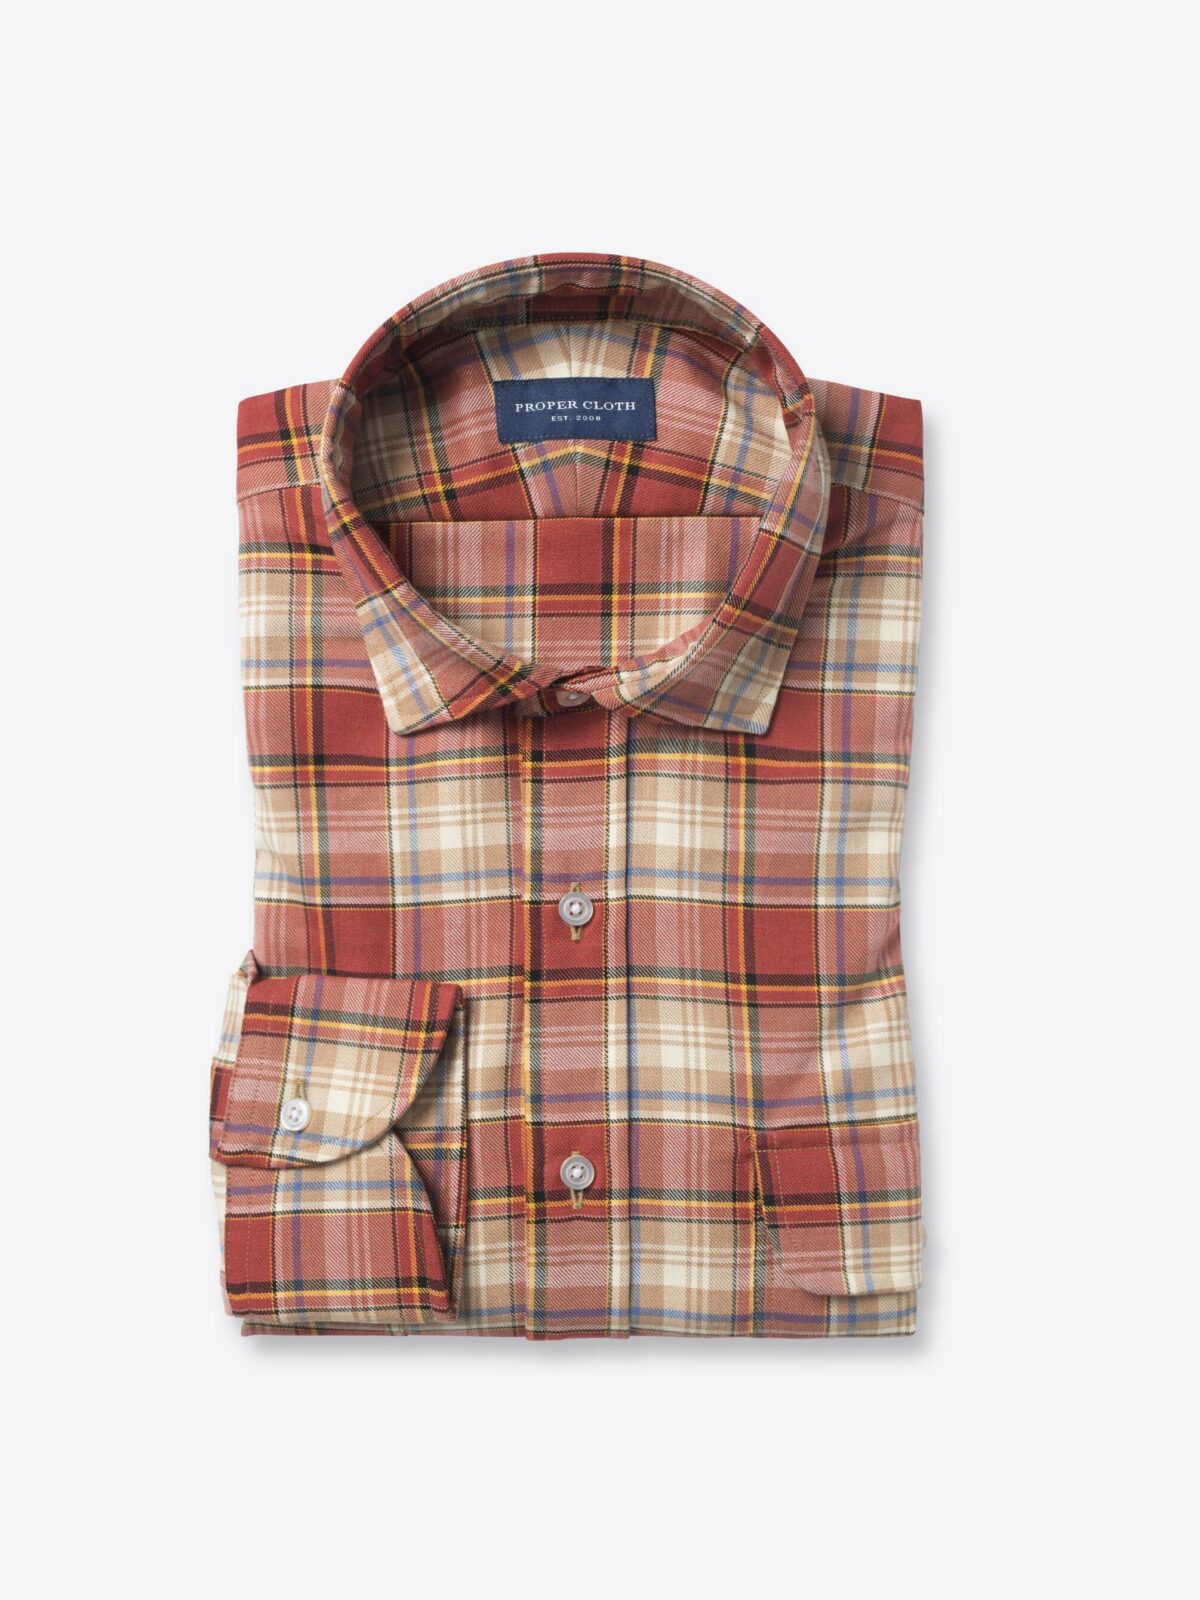 Portuguese Terra Cotta and Beige Plaid Shirt by Proper Cloth